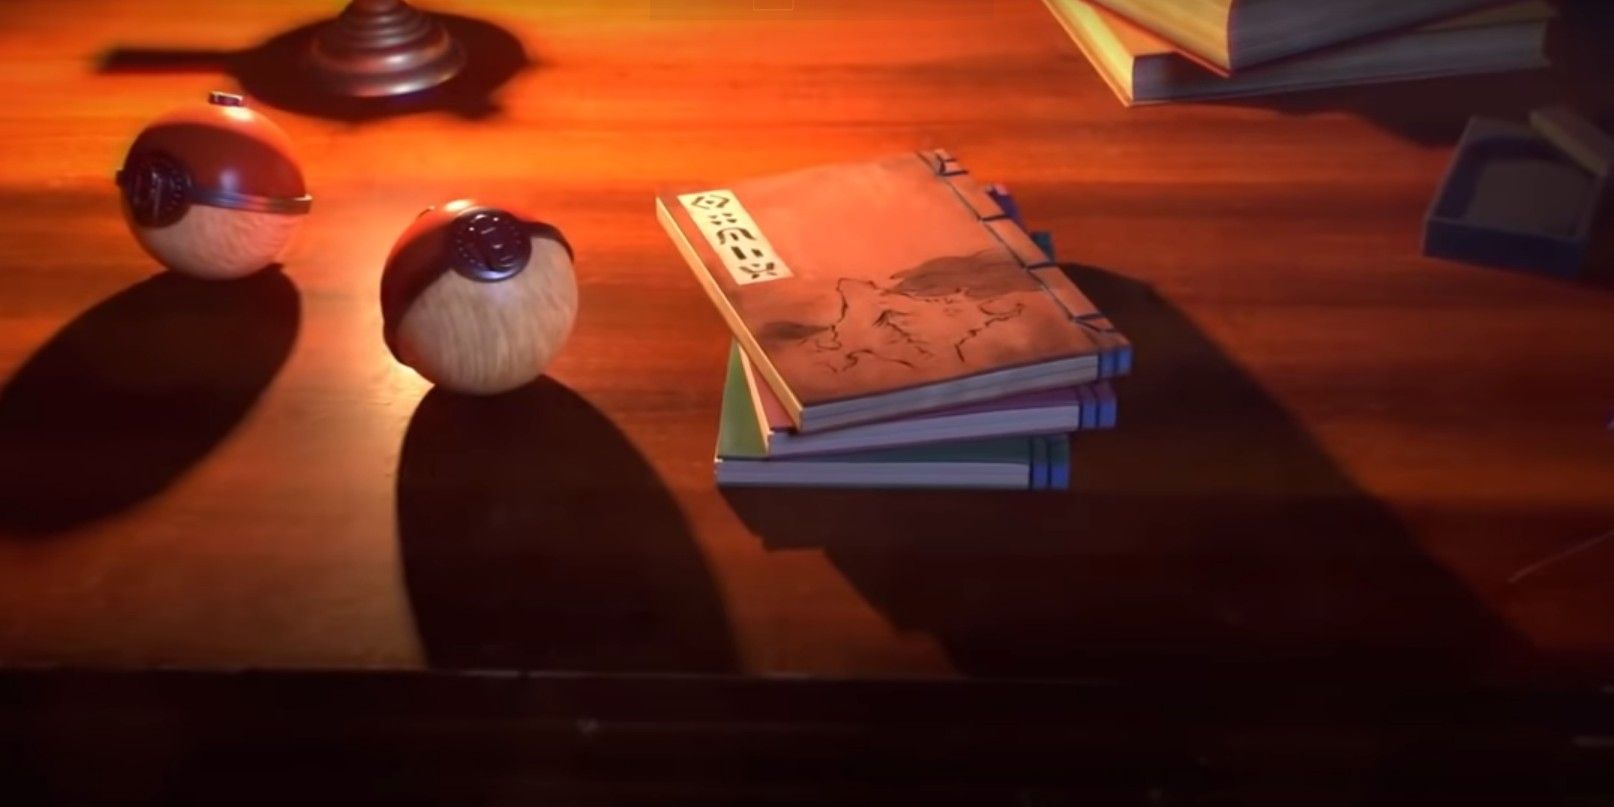 Book and pokeballs on a desk in Legends Arceus Pokemon game trailer